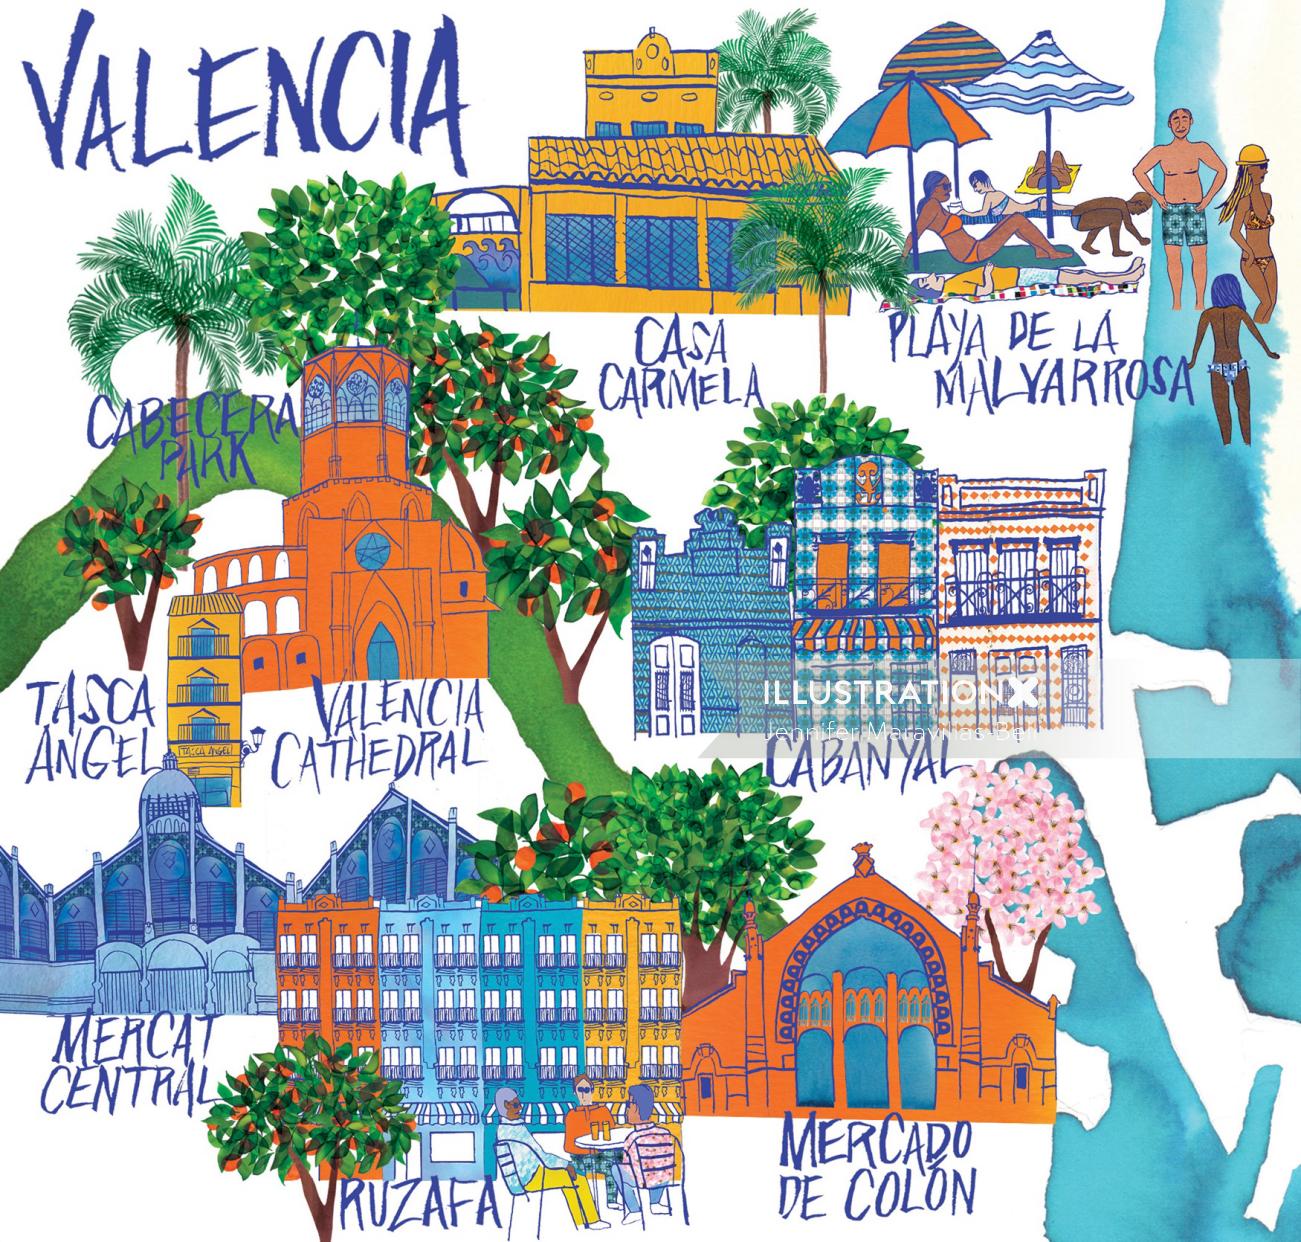 An illustration of Valencia city